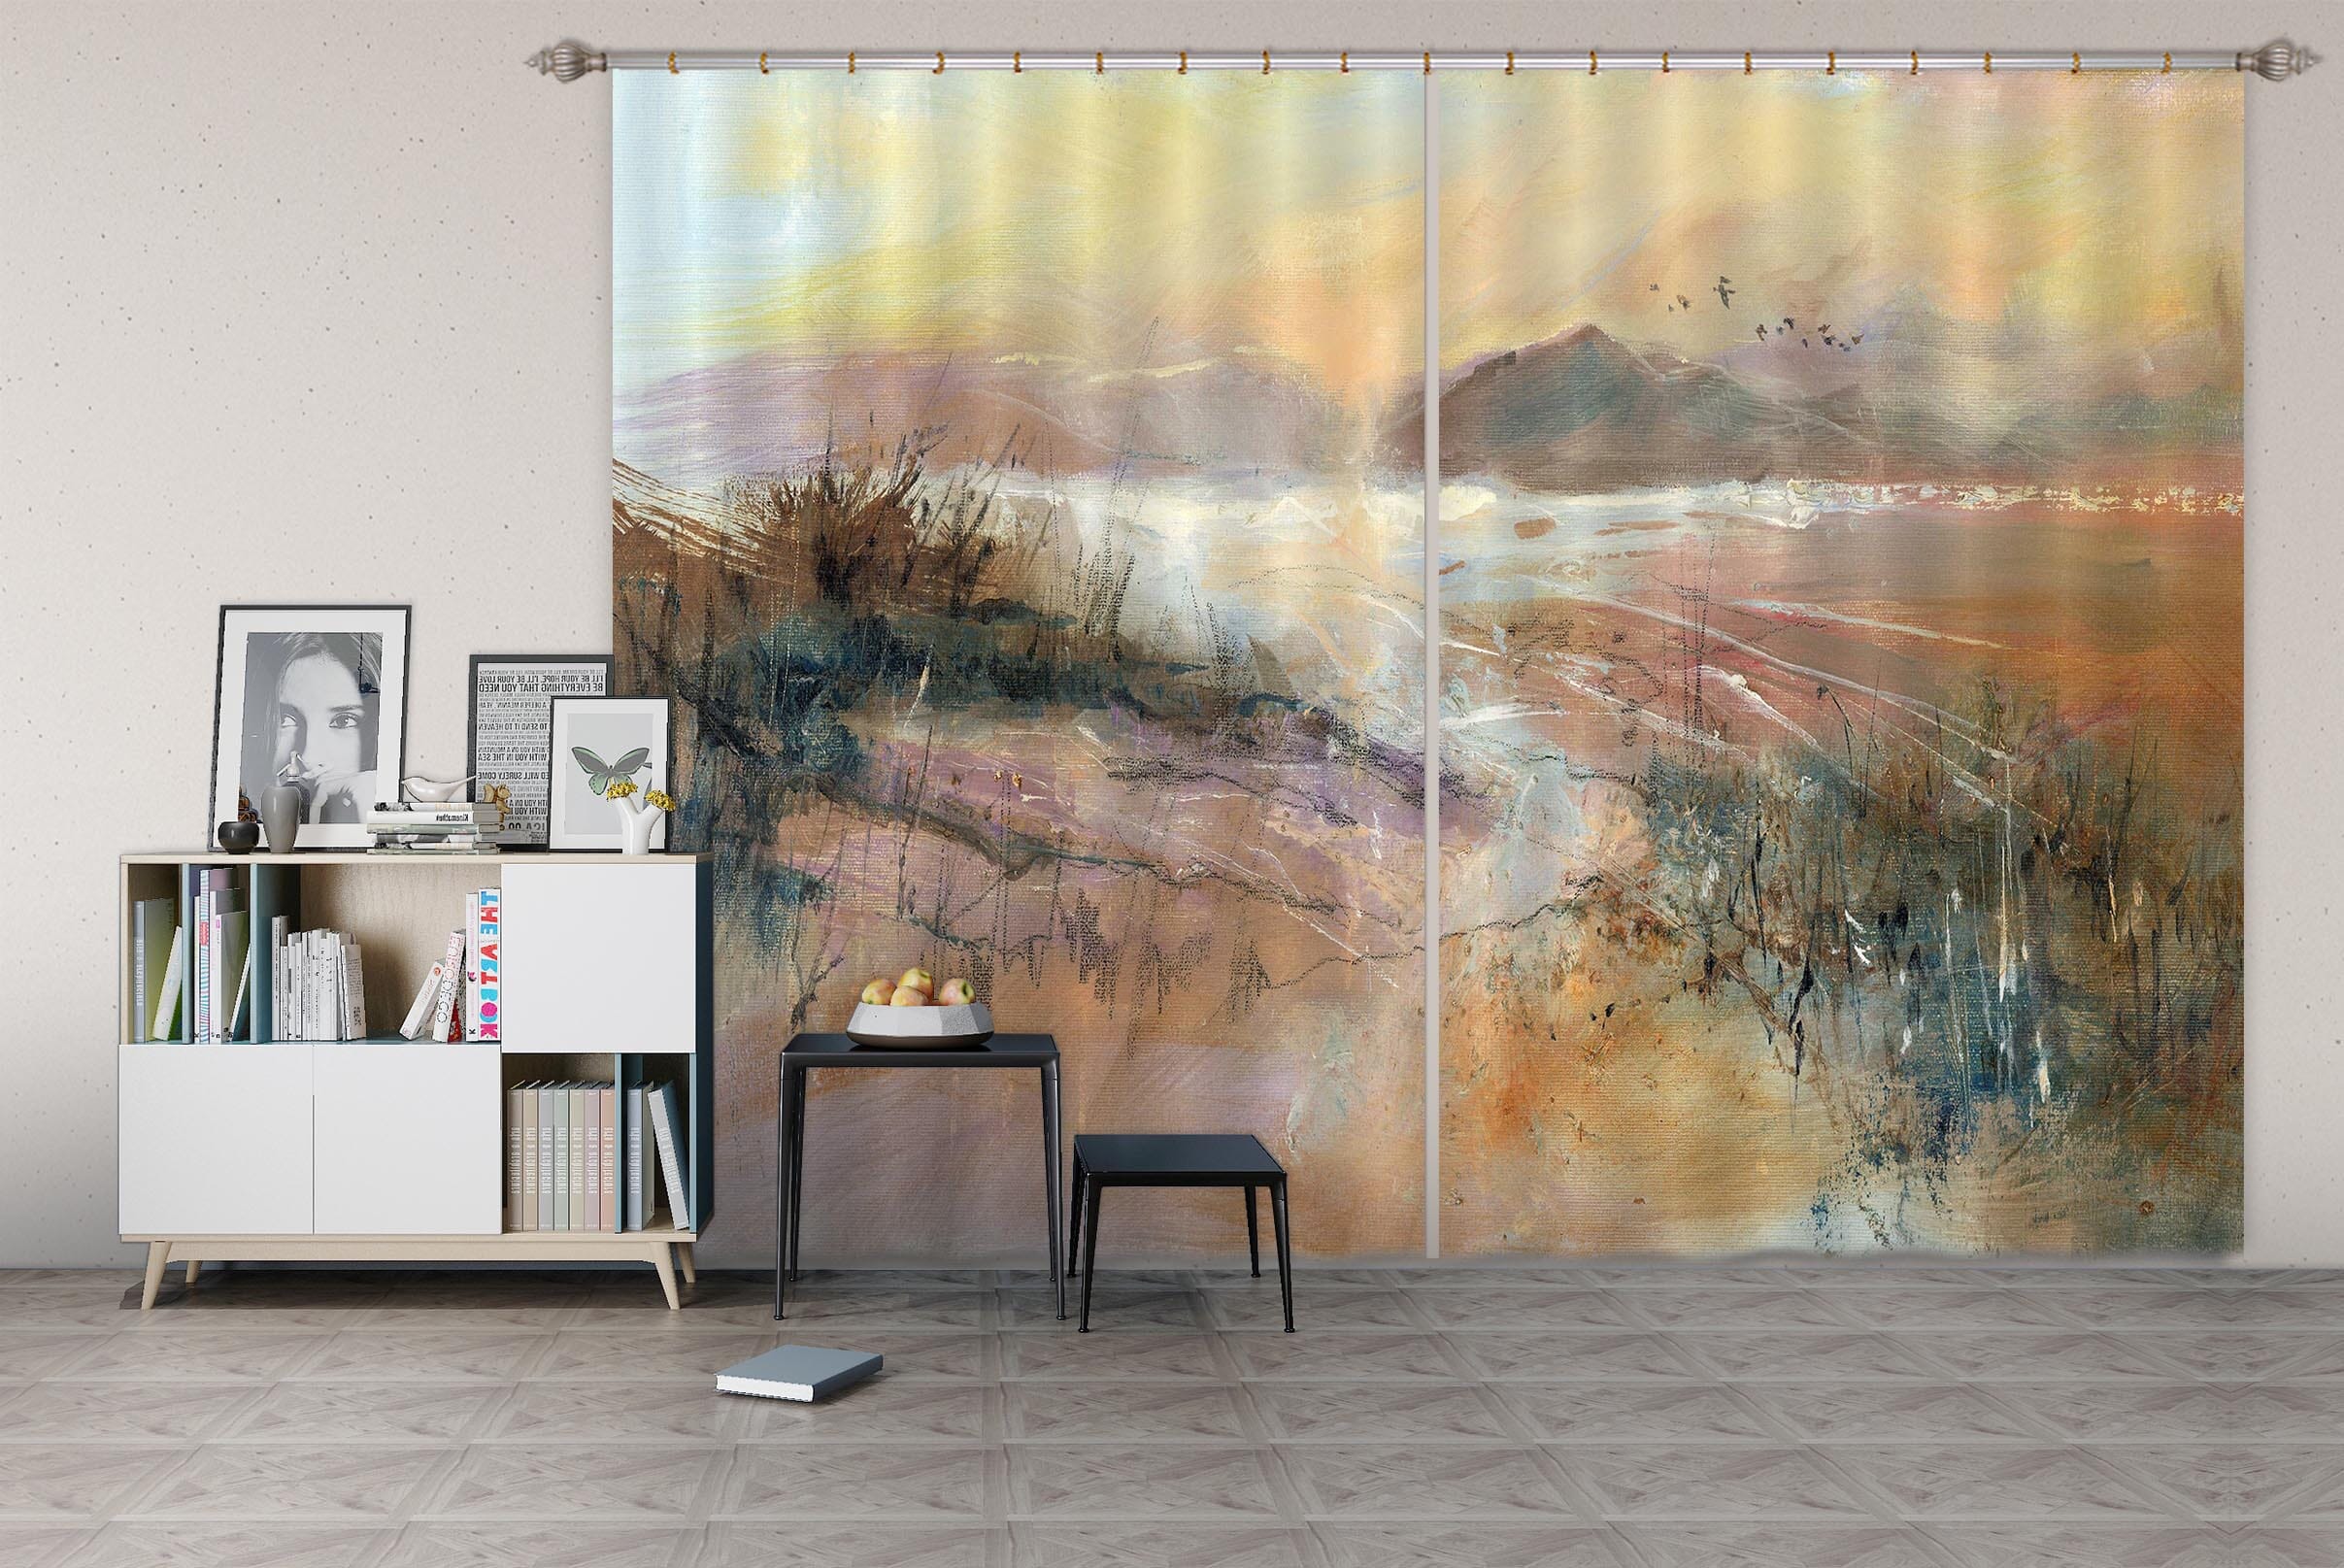 3D Splendid Mountains And Rivers 002 Anne Farrall Doyle Curtain Curtains Drapes Curtains AJ Creativity Home 